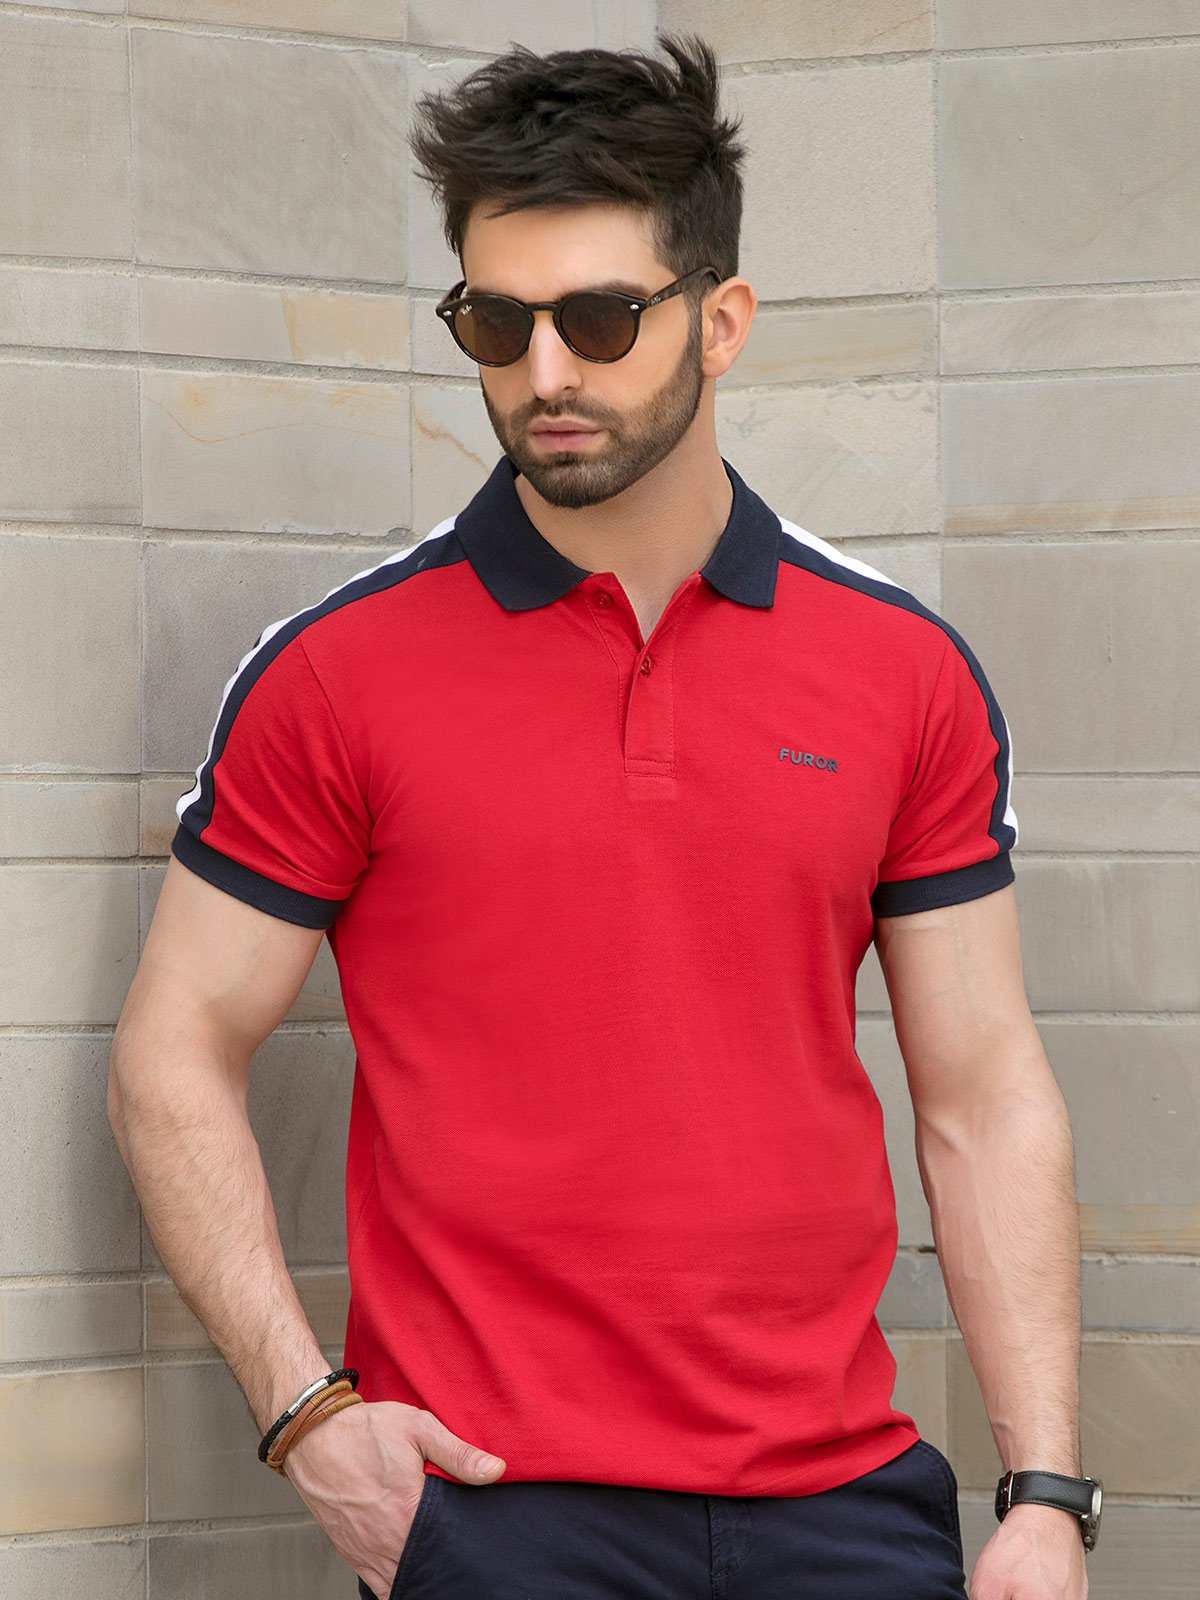 Men's Red Polo Shirt - FMTCP18-005